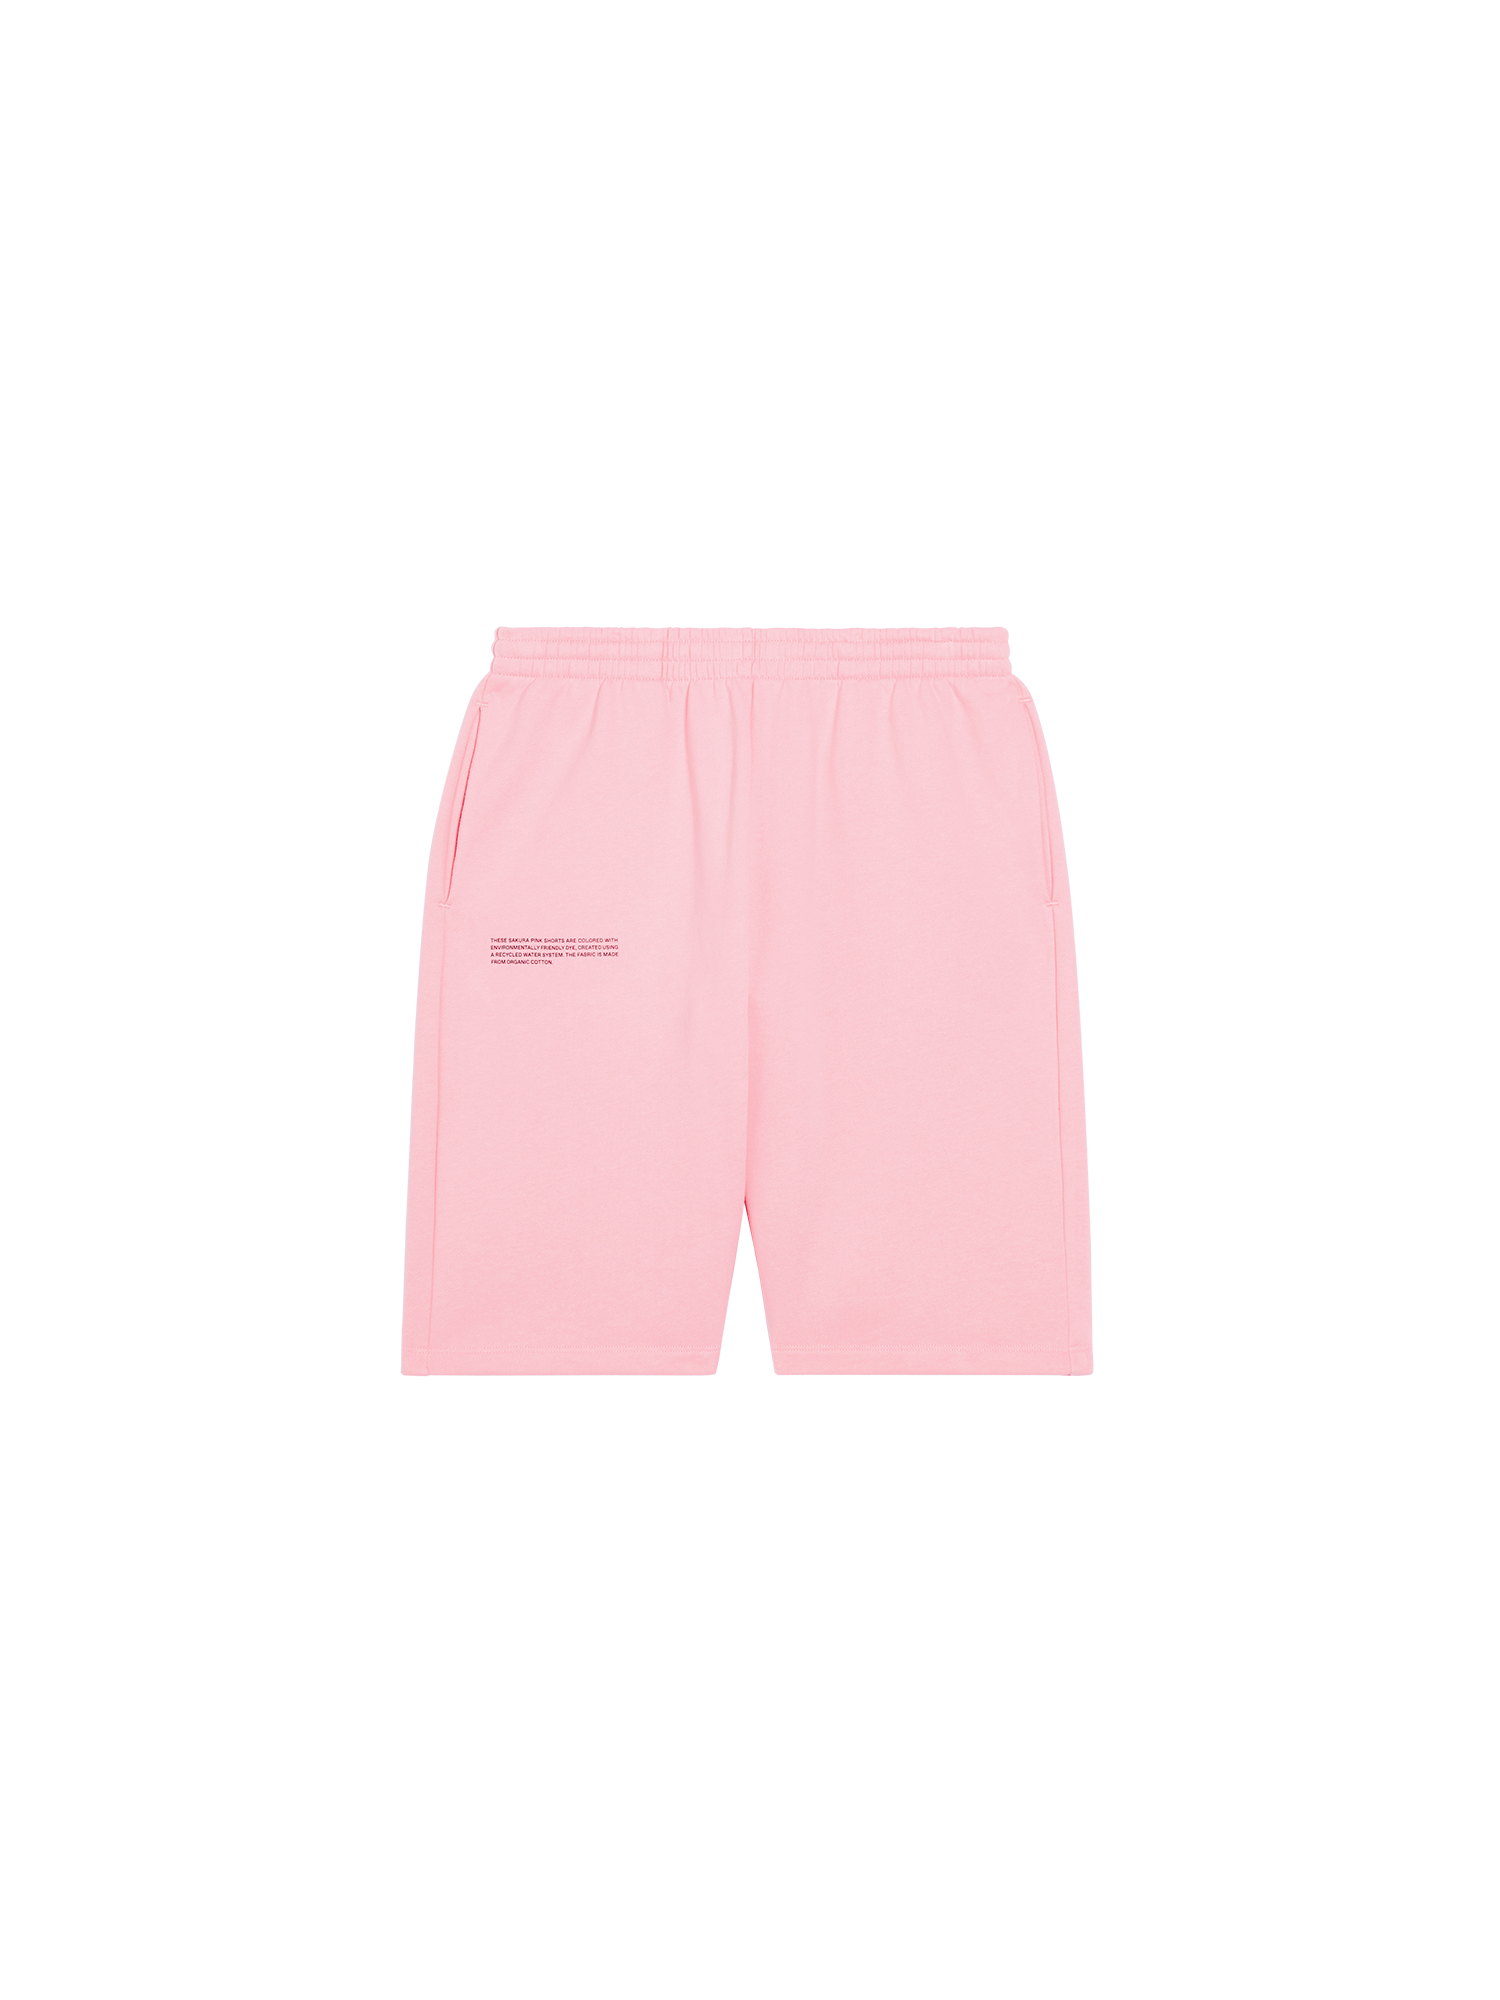 365 Midweight Long Shorts - Sakura Pink - Pangaia